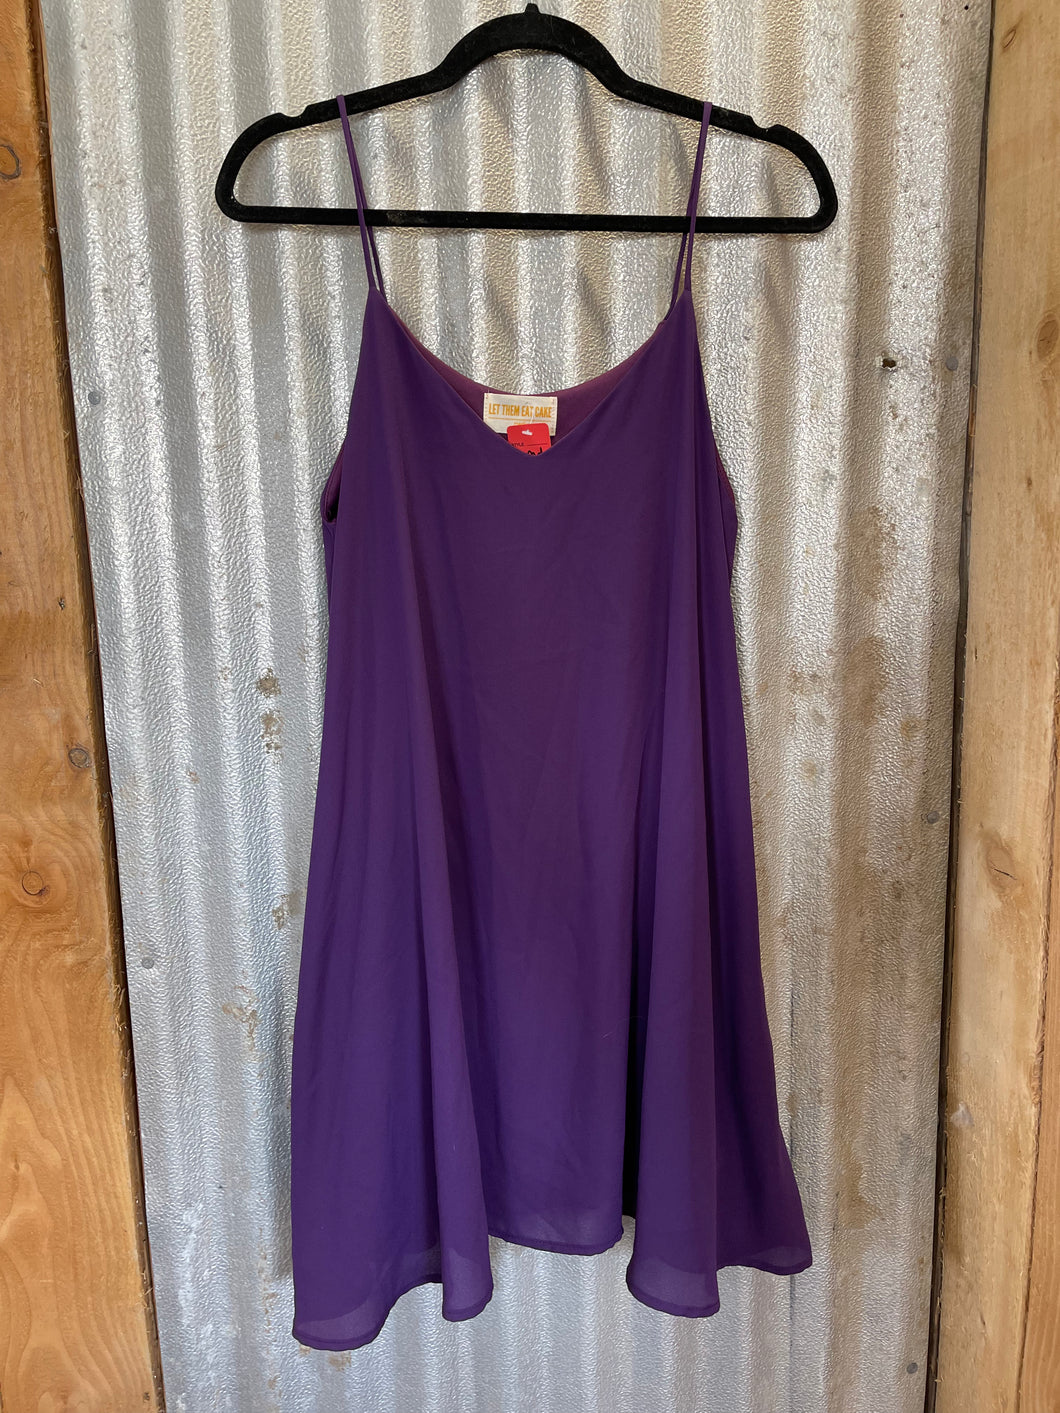 MEDIUM: NWT Purple Dress